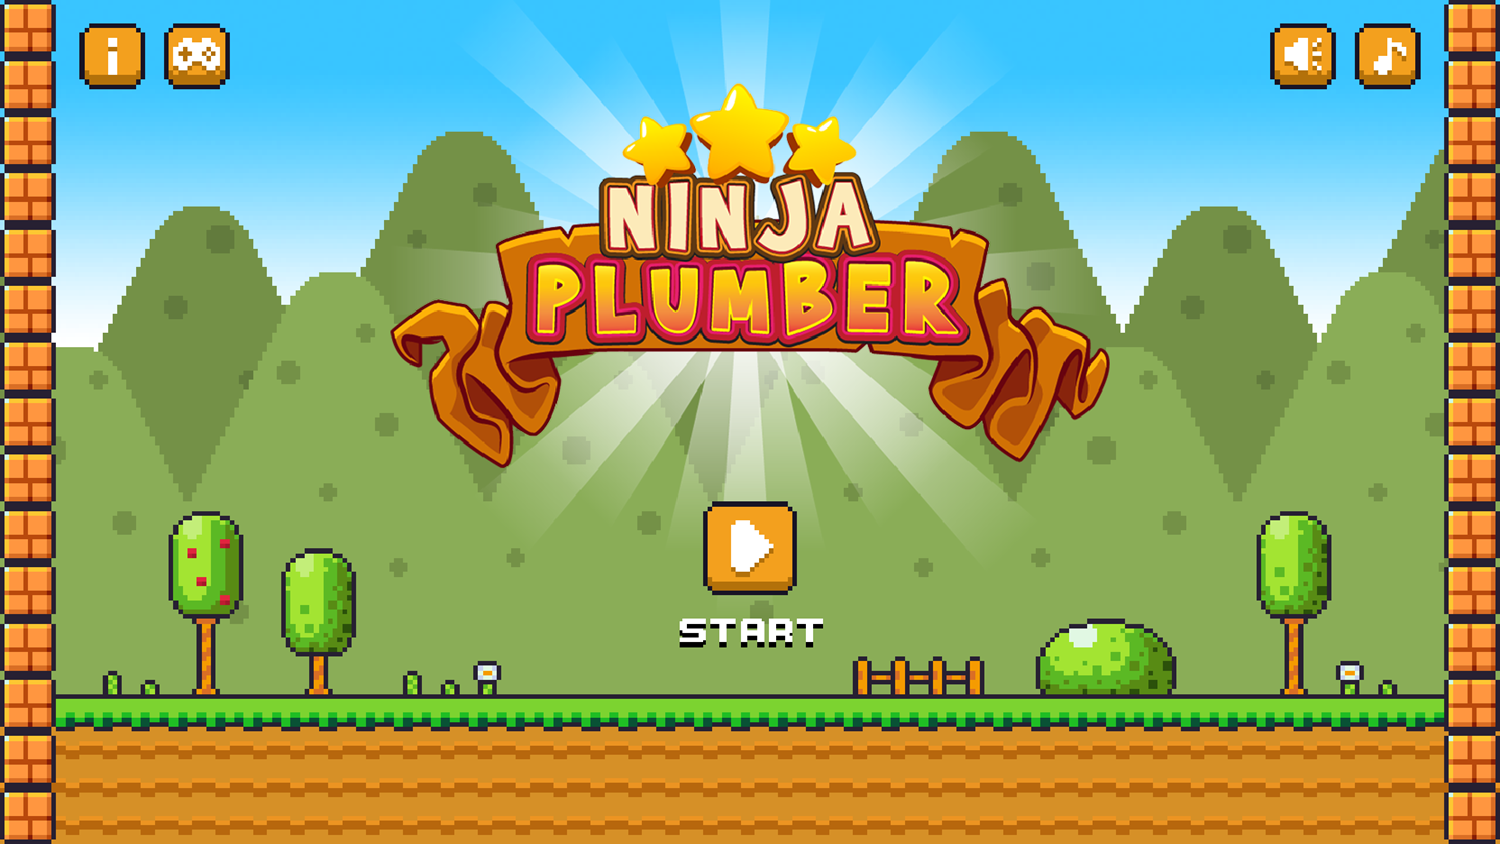 Ninja Plumber Game Welcome Screen Screenshot.